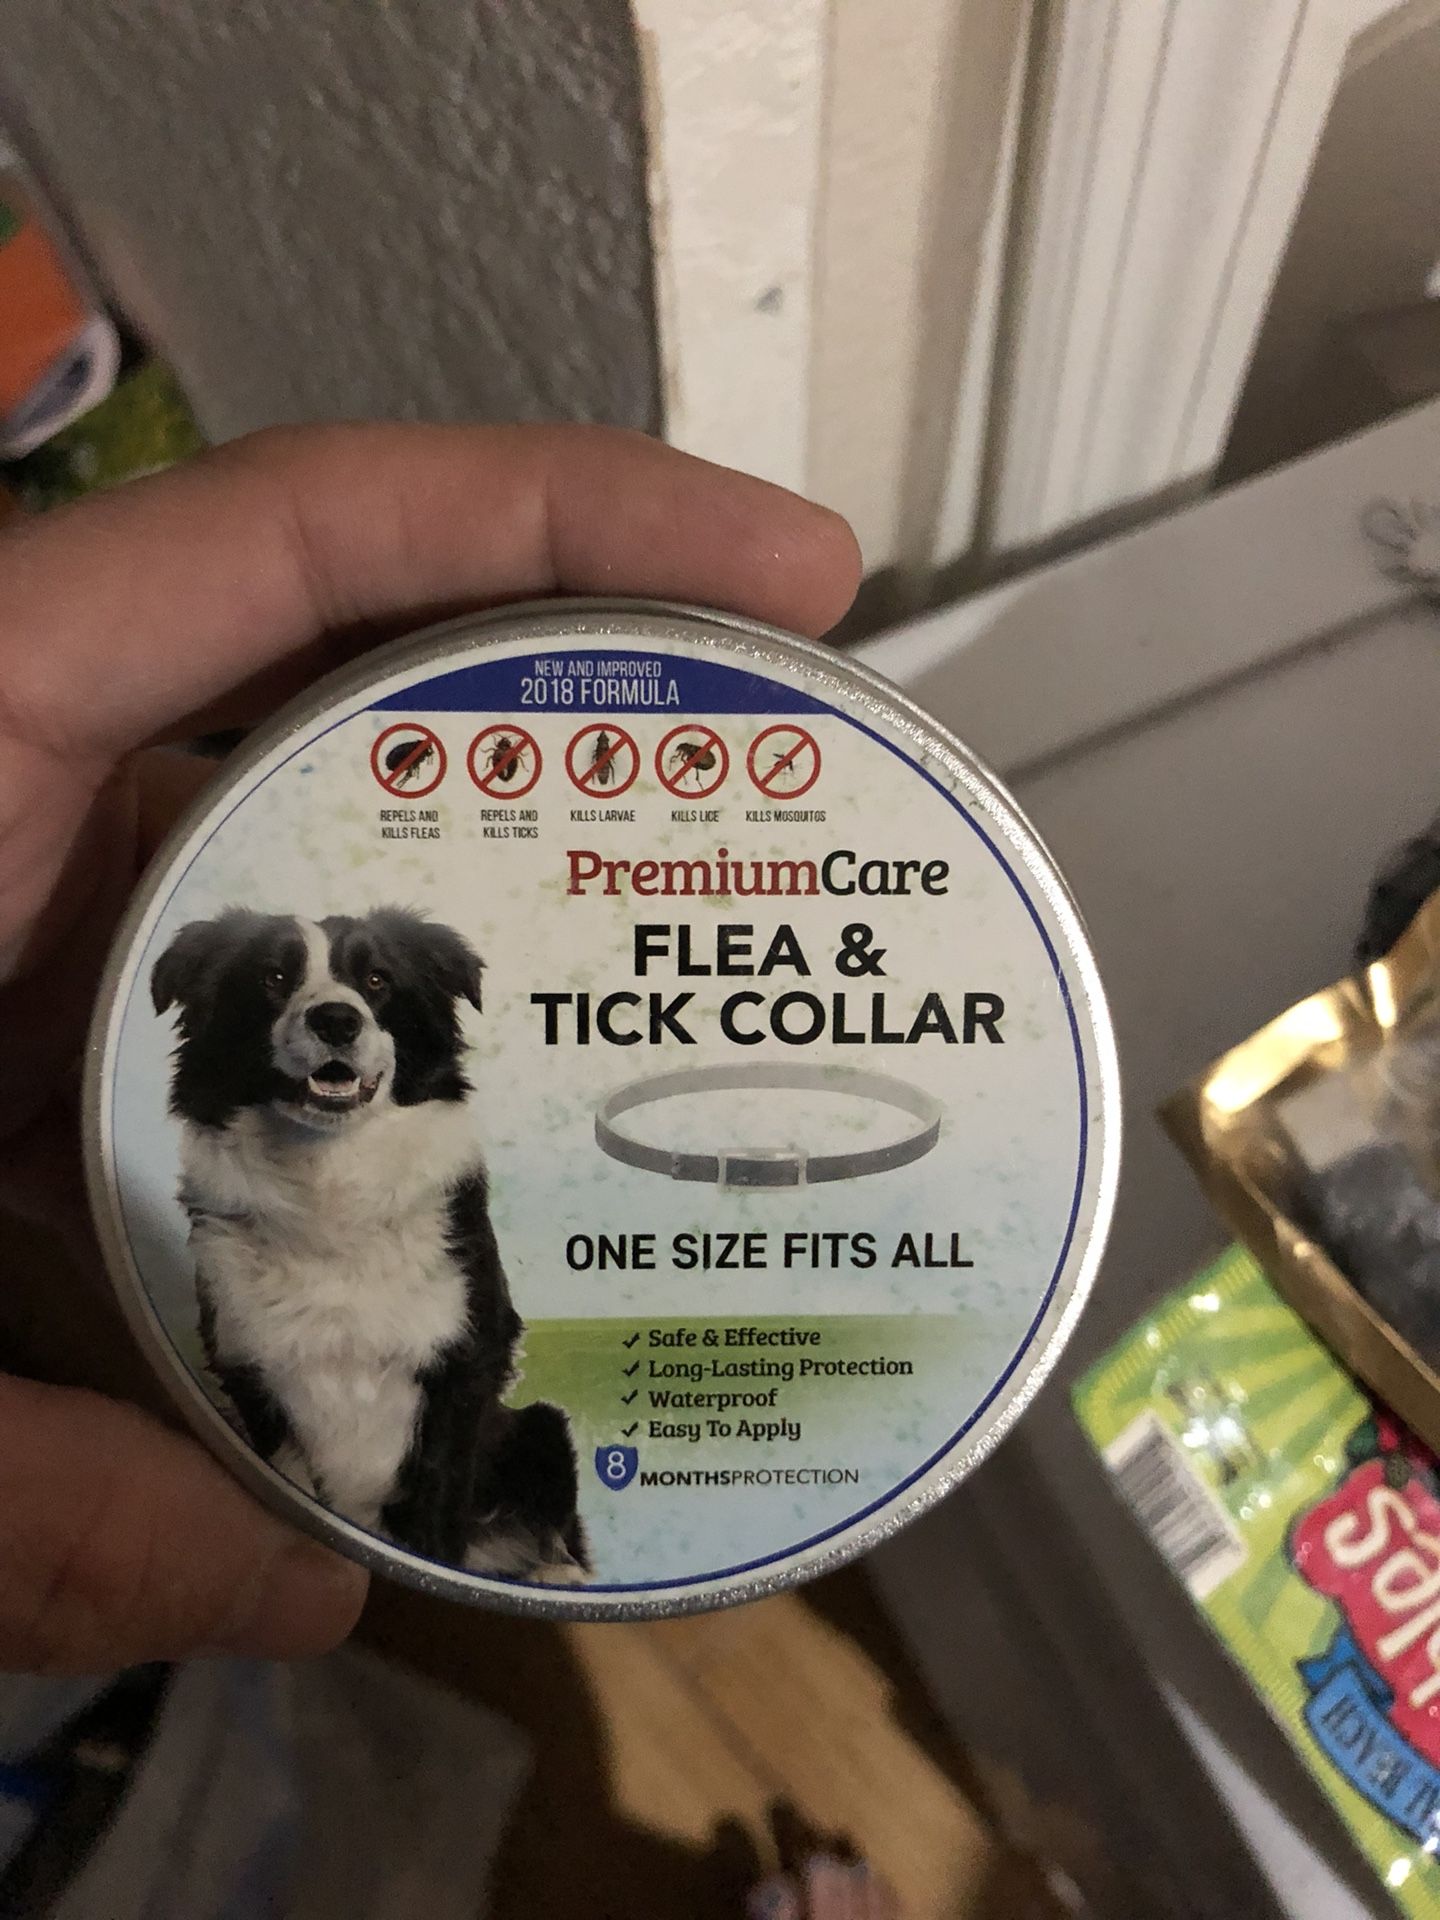 Flea and tick collar